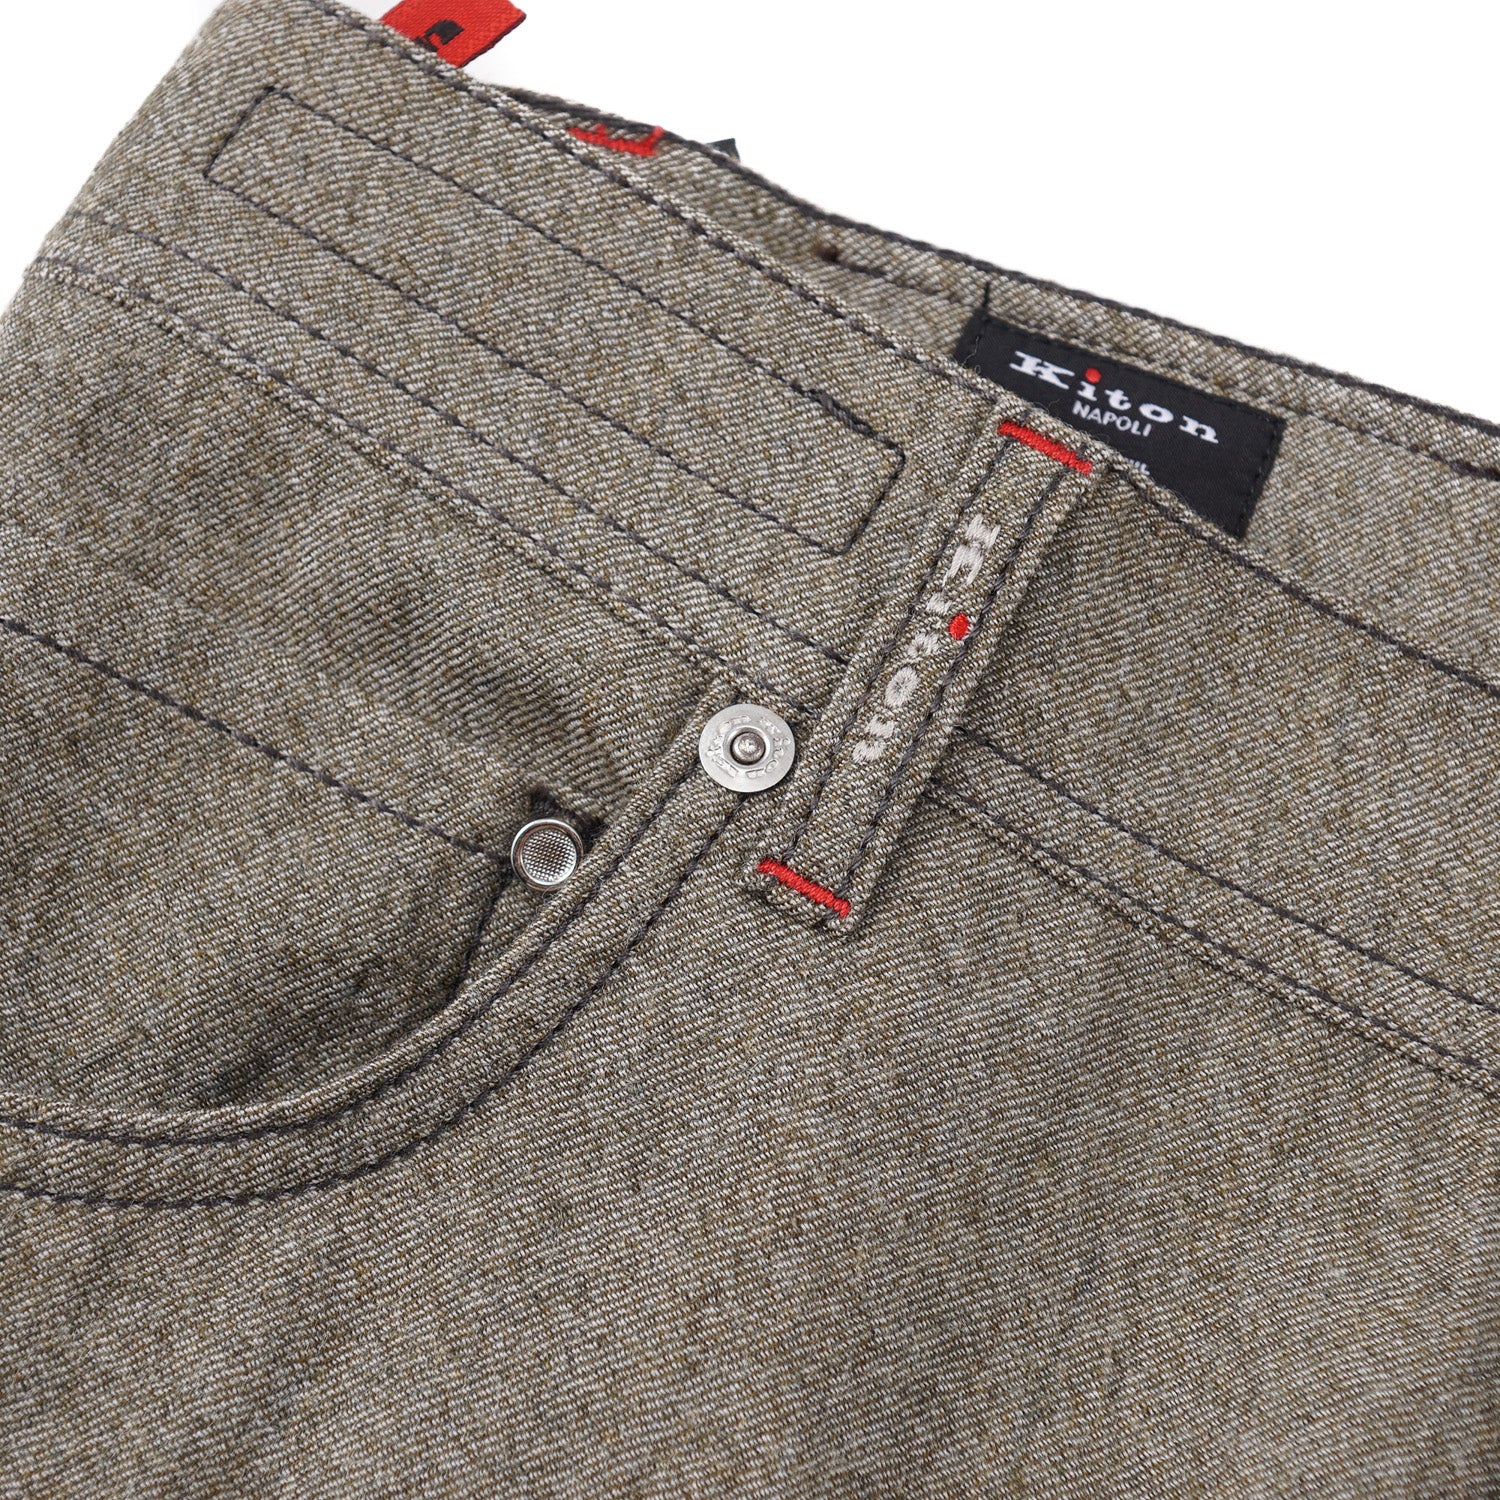 Narrow-Fit Five-Pocket Pants